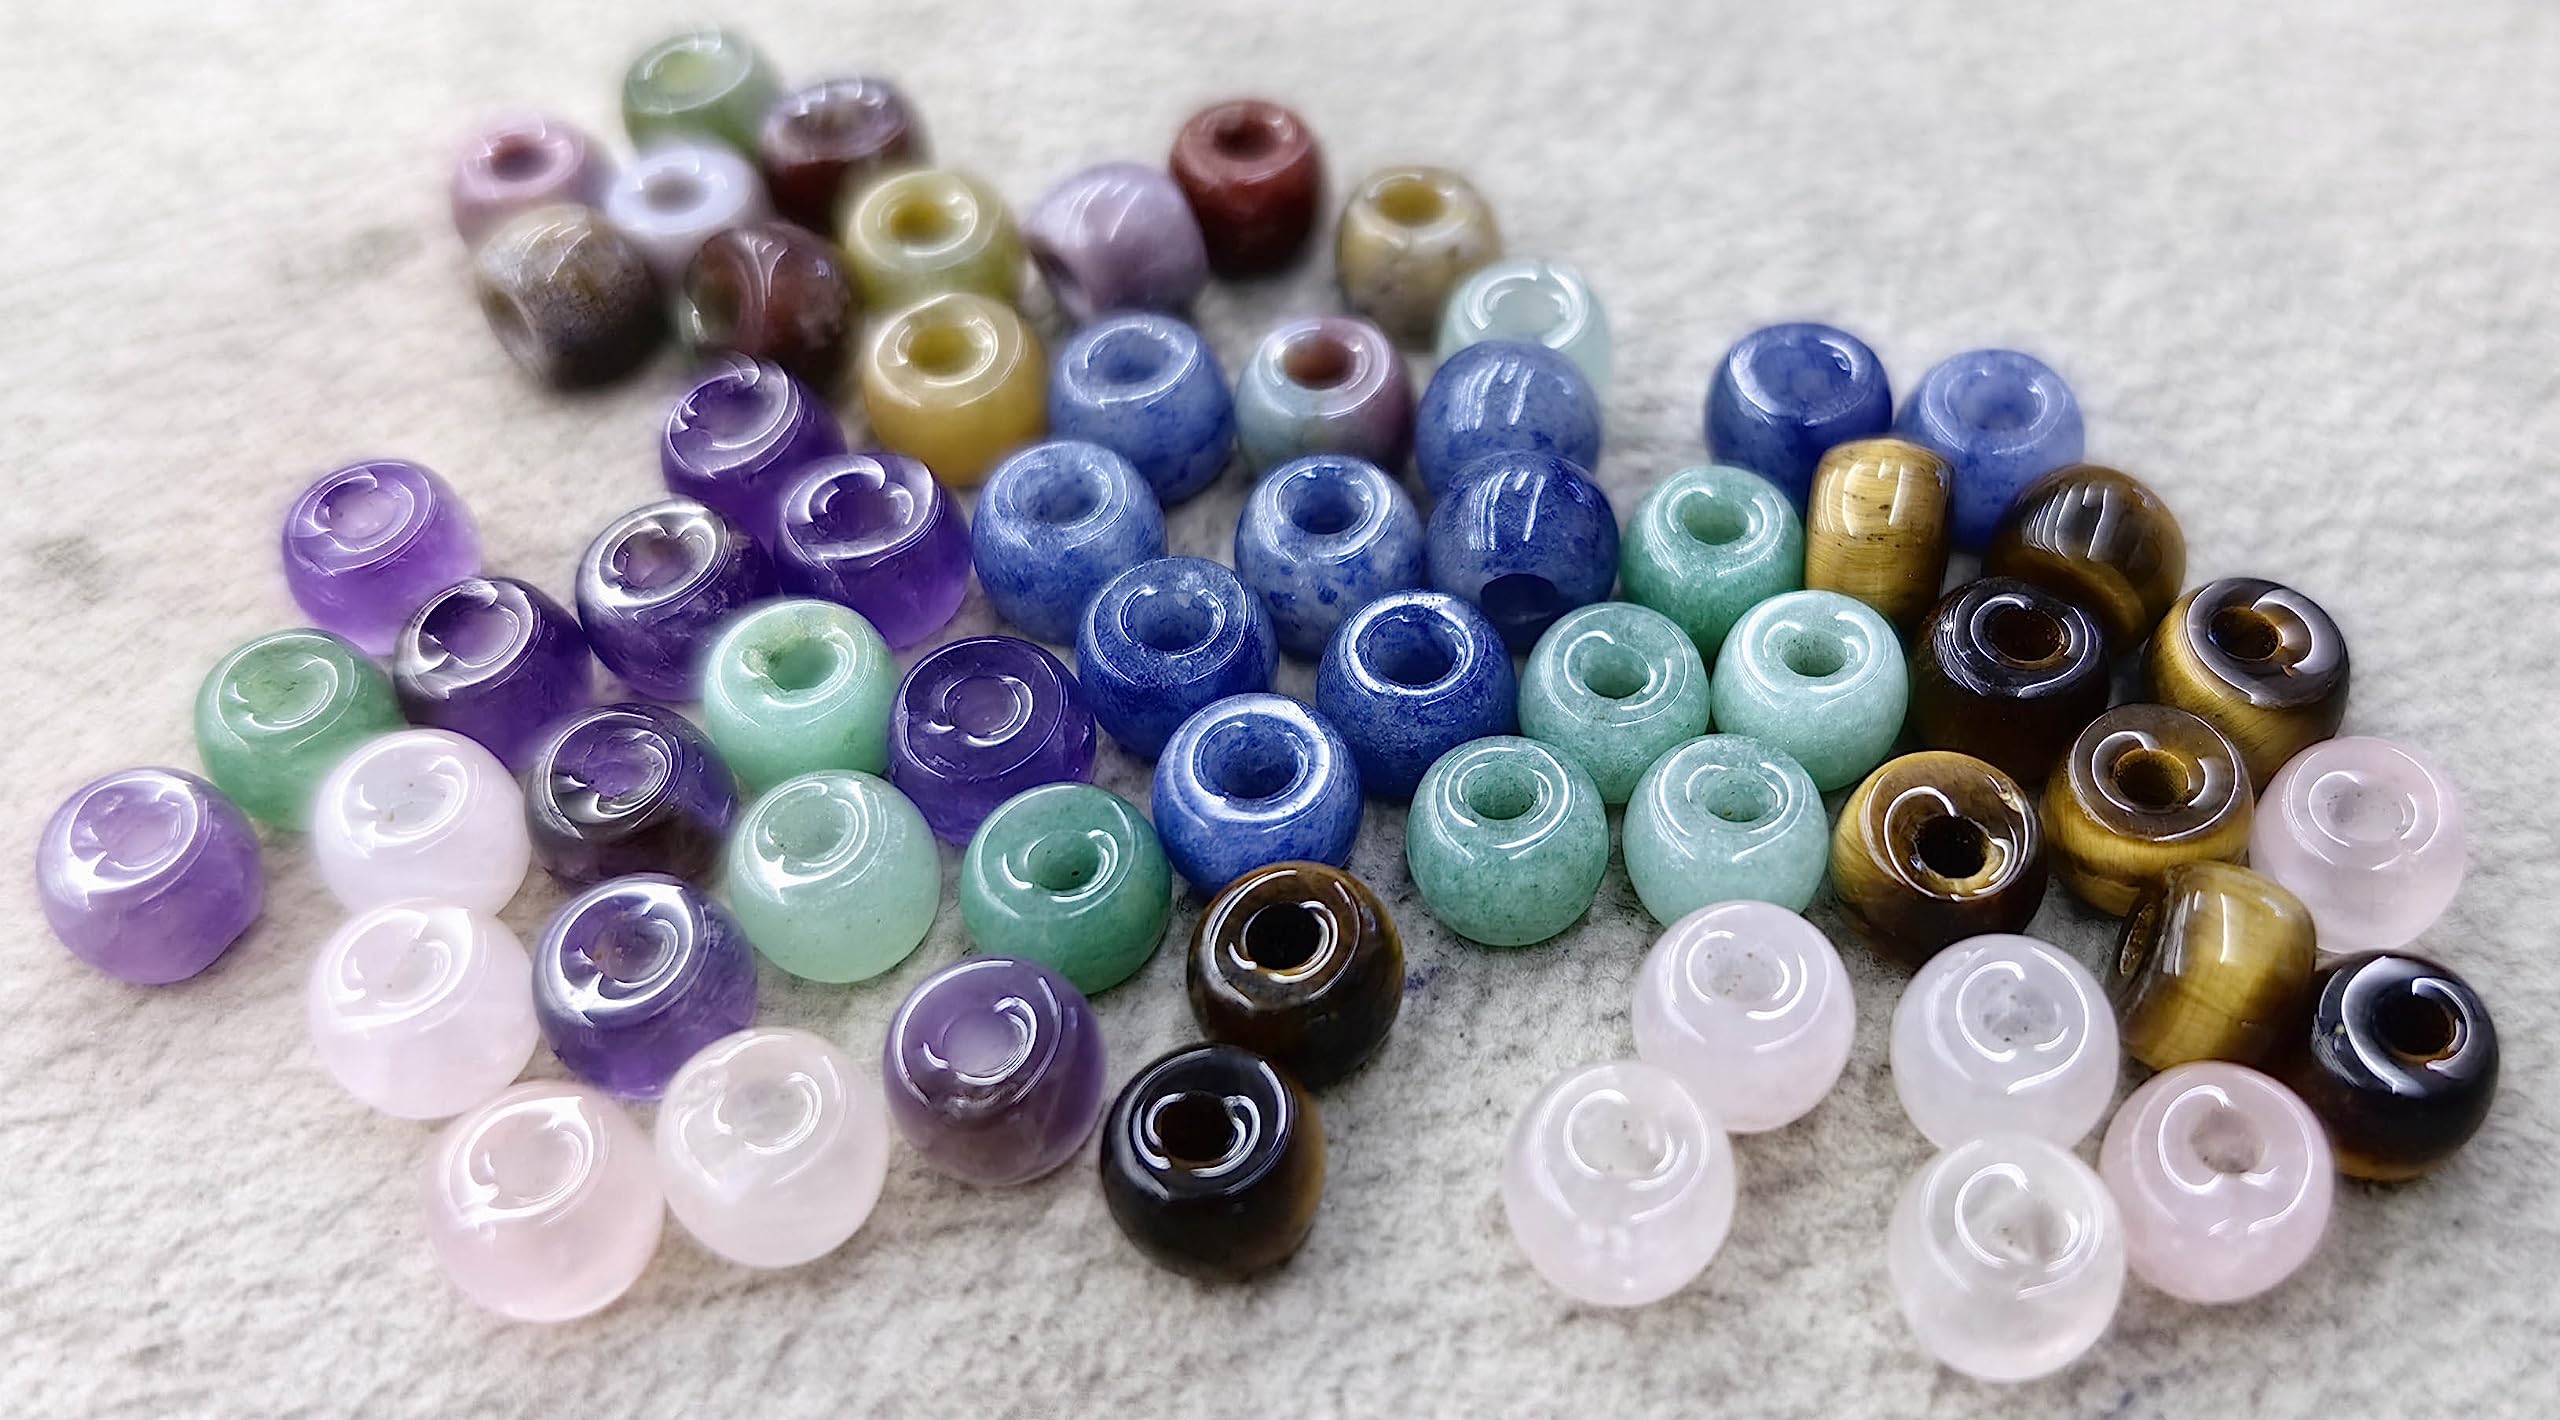 Large Hole-50pcs Mixed Stone 10x6mm Amethyst Rose Quartz River Jasper-Amazonite-Blue -Agate-Turquoise Beads Wheel Rondelle Spacer Loose Beads